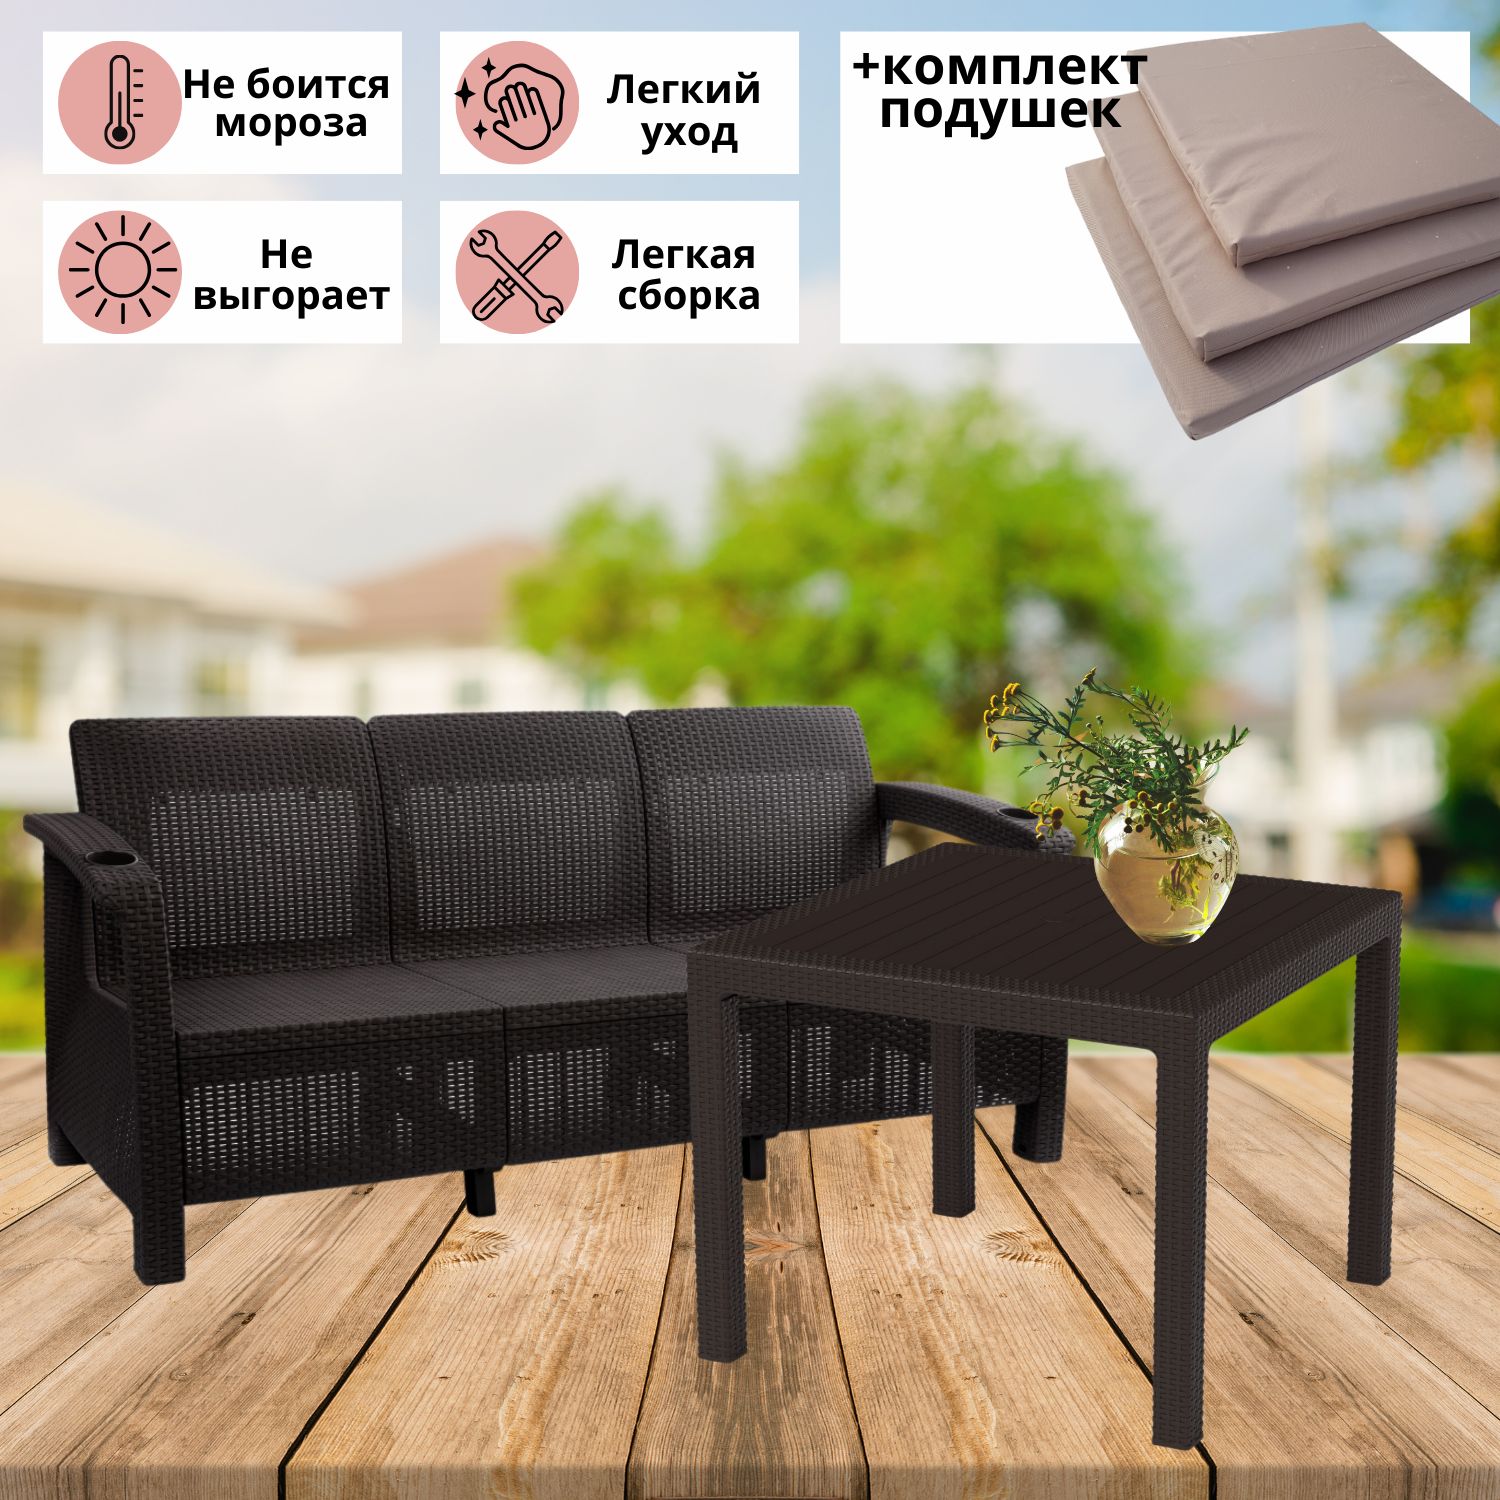 Комплект мебели для дачи с подушками Альтернатива Фазенда-3 RT0447 диван и обеденный стол